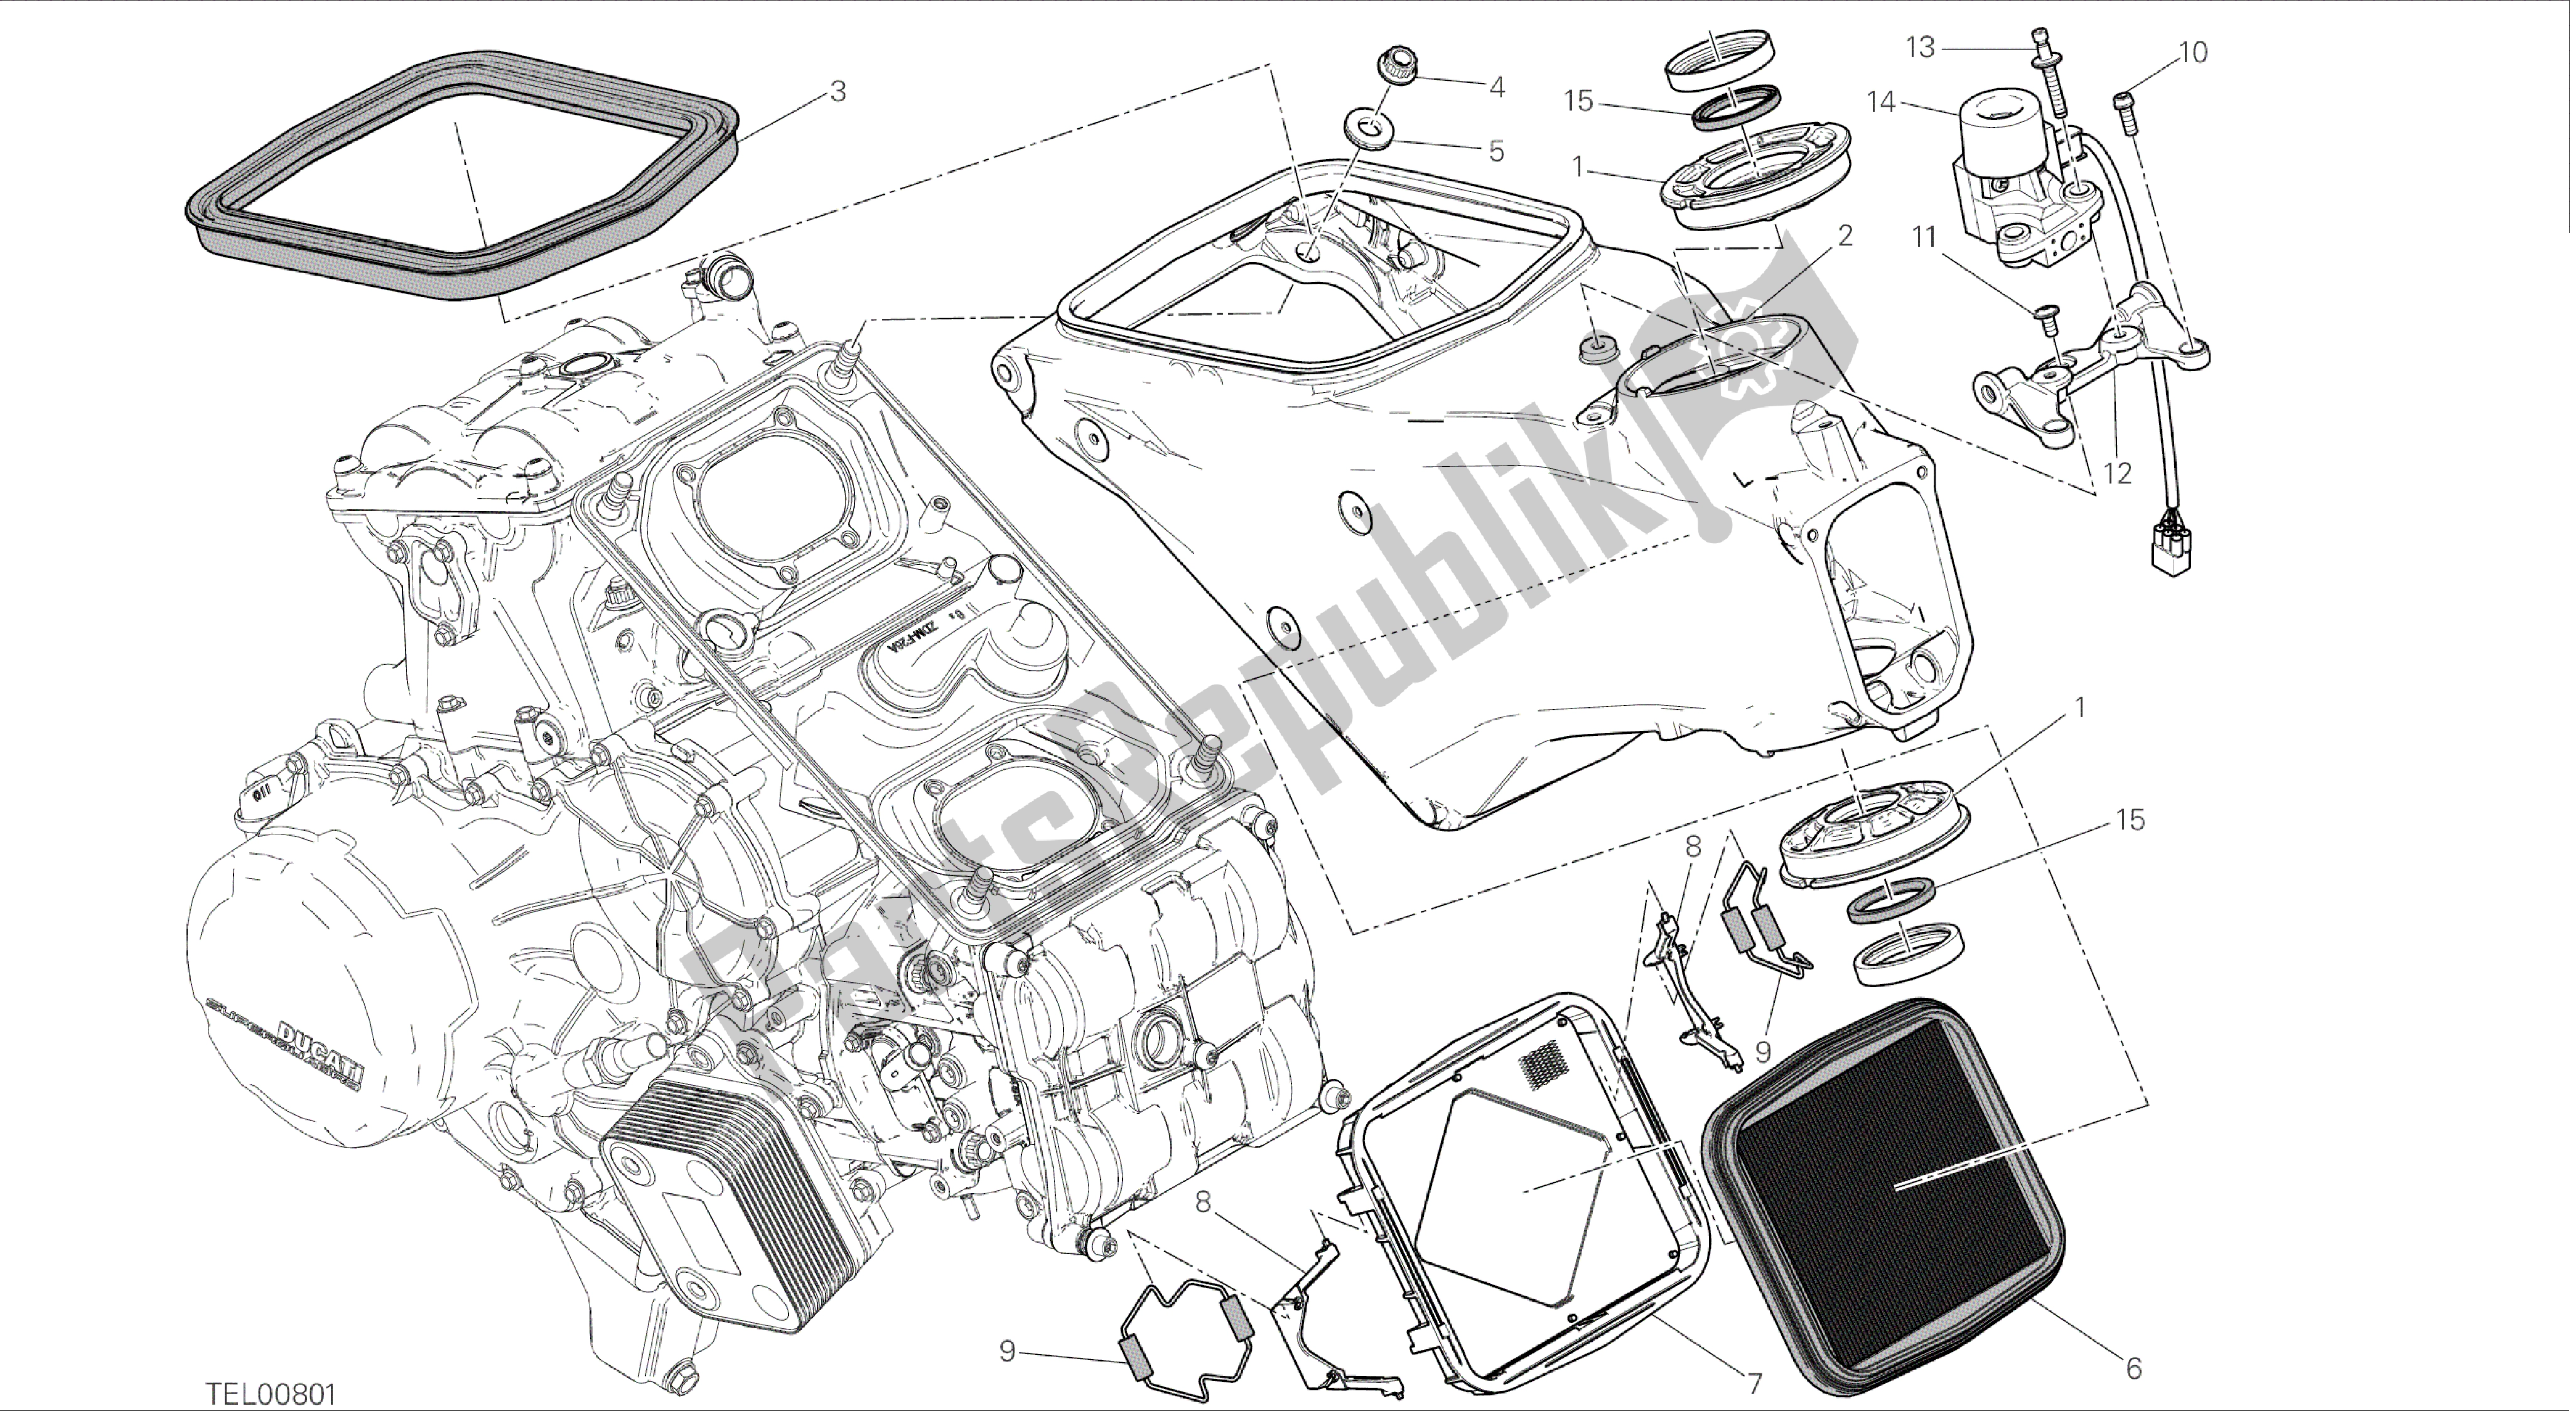 Alle onderdelen voor de Tekening 022 - Frame [mod: 899 Abs; Xst: Aus, Eur, Fra, Jap, Twn] Groepsframe van de Ducati Panigale 899 2014